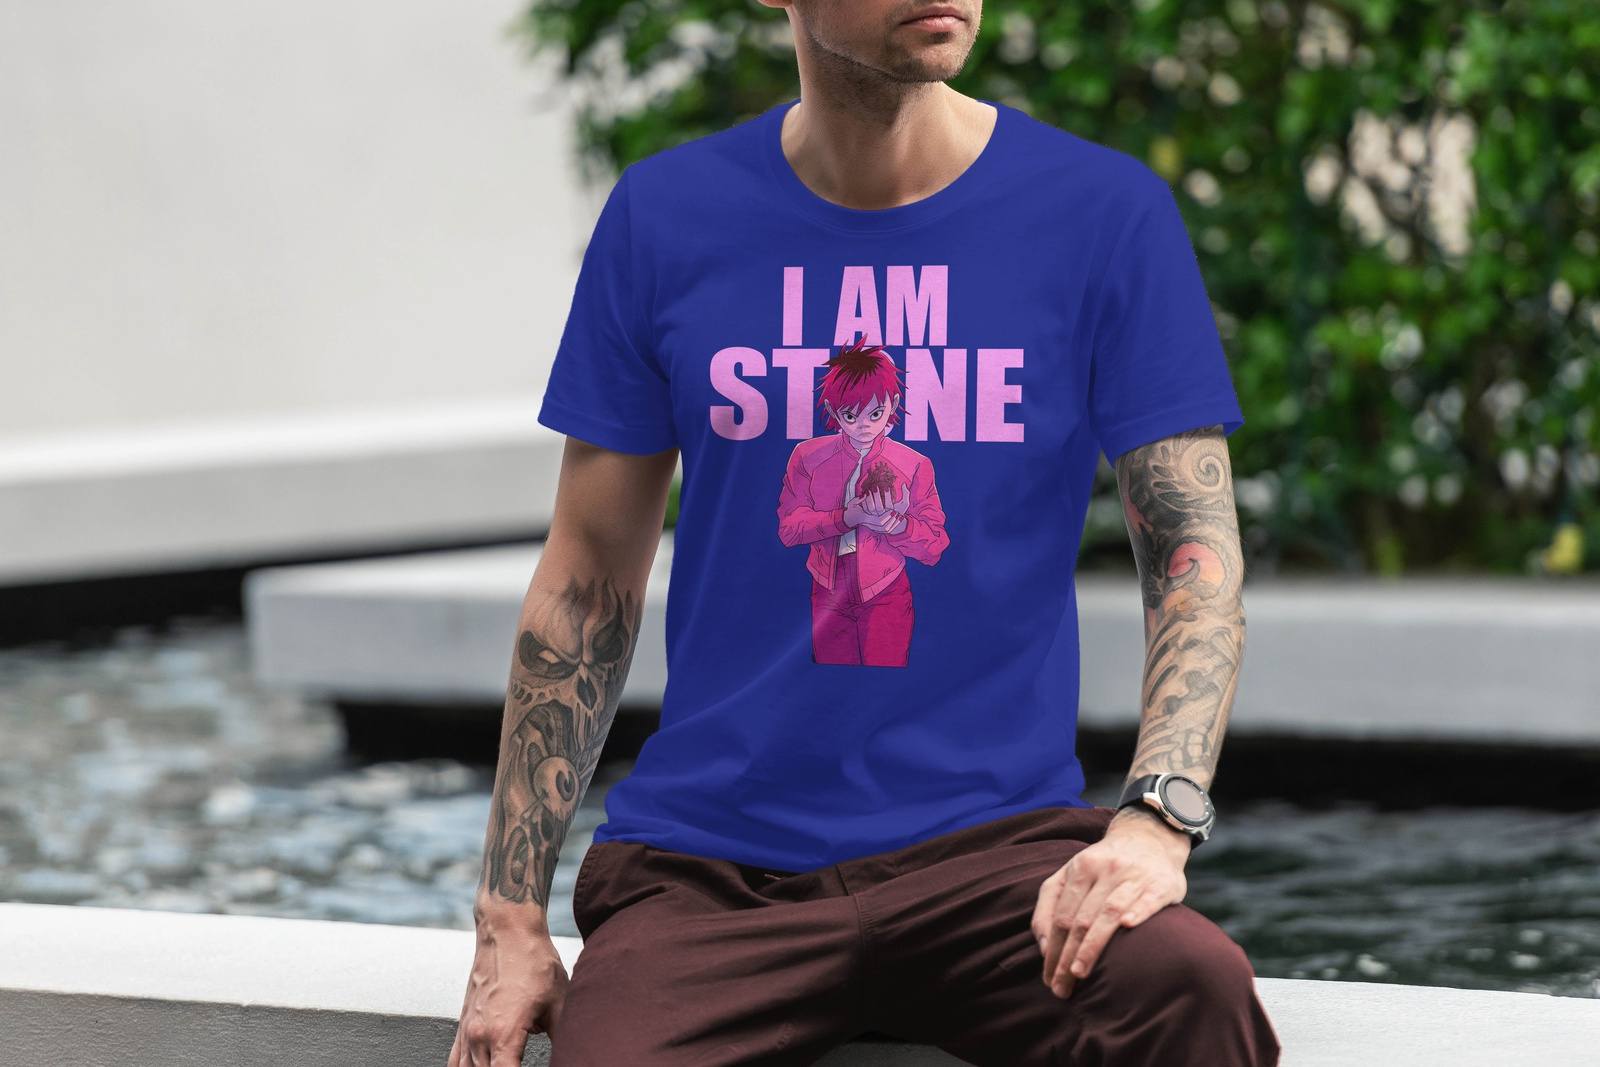 Heart of Stone girl T-Shirt